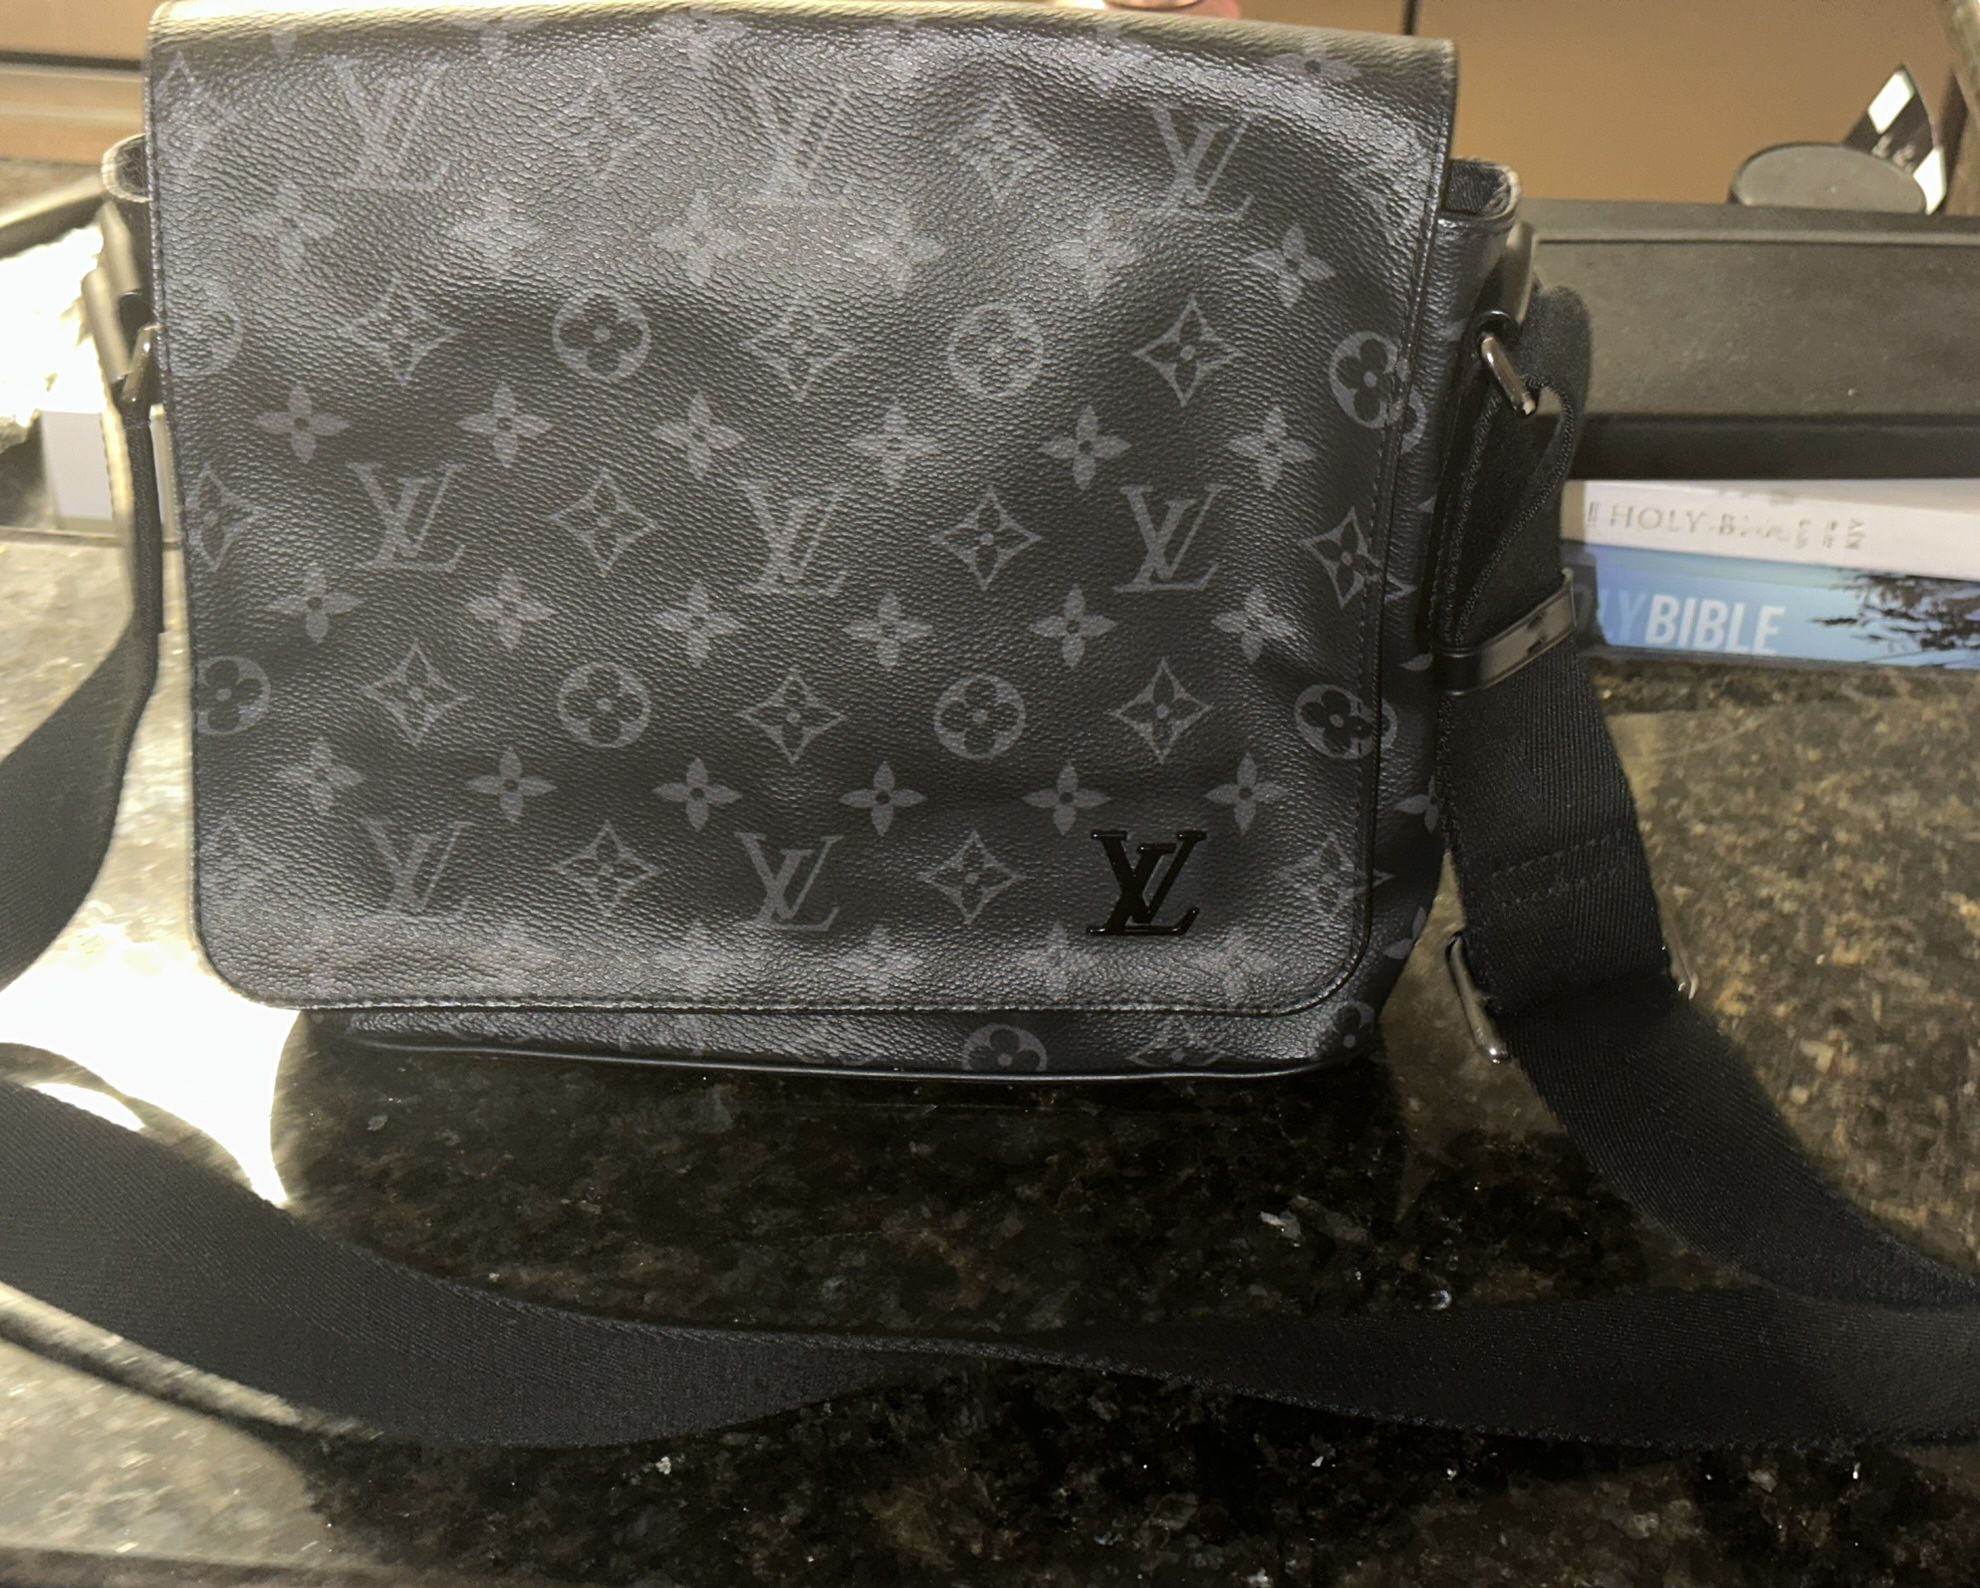 Authentic Louis Vuitton Damier Ebene Canvas Naviglio Shoulder Messenger Bag  Briefcase for Sale in Arlington, TX - OfferUp